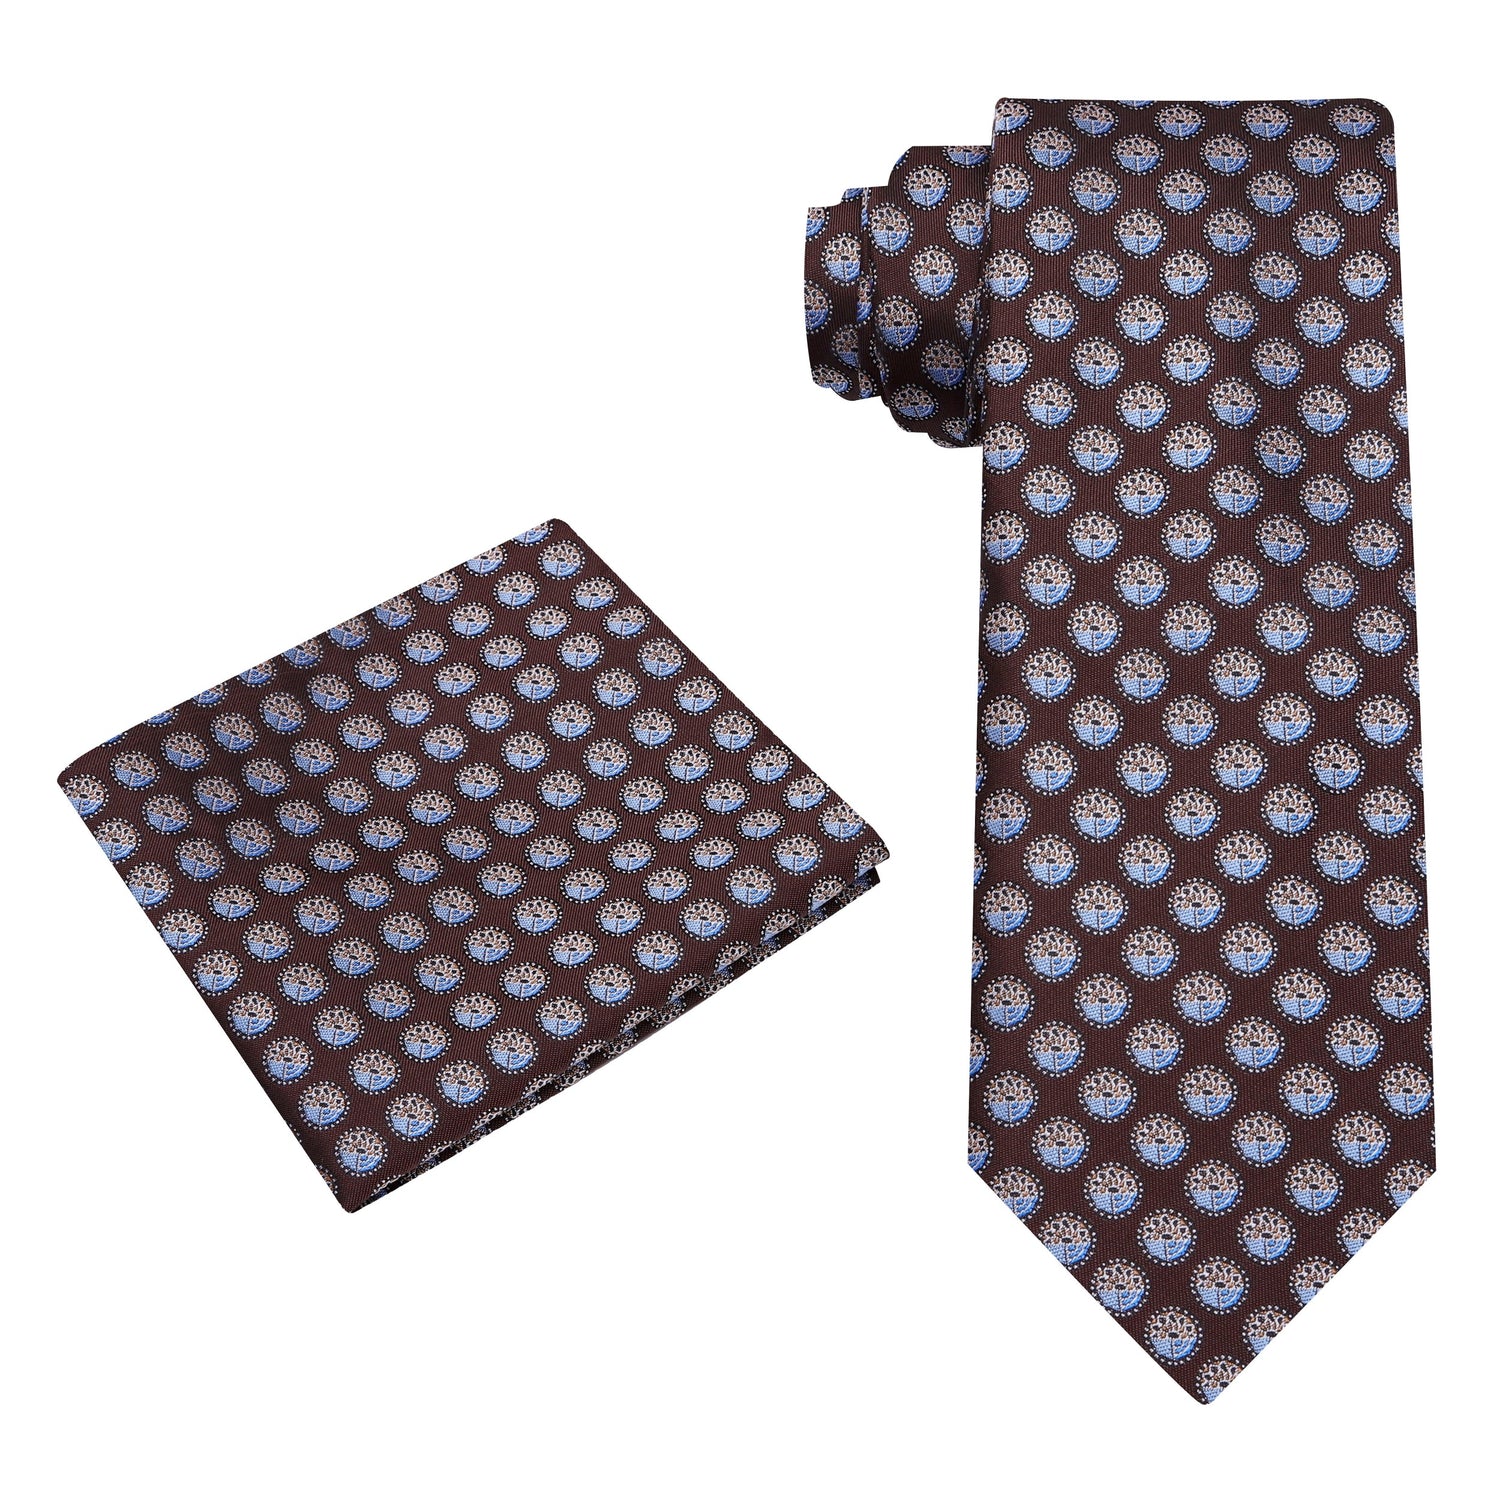 Alt View: A Brown, Light Blue Geometric Circles Pattern Silk Necktie, Matching Pocket Square